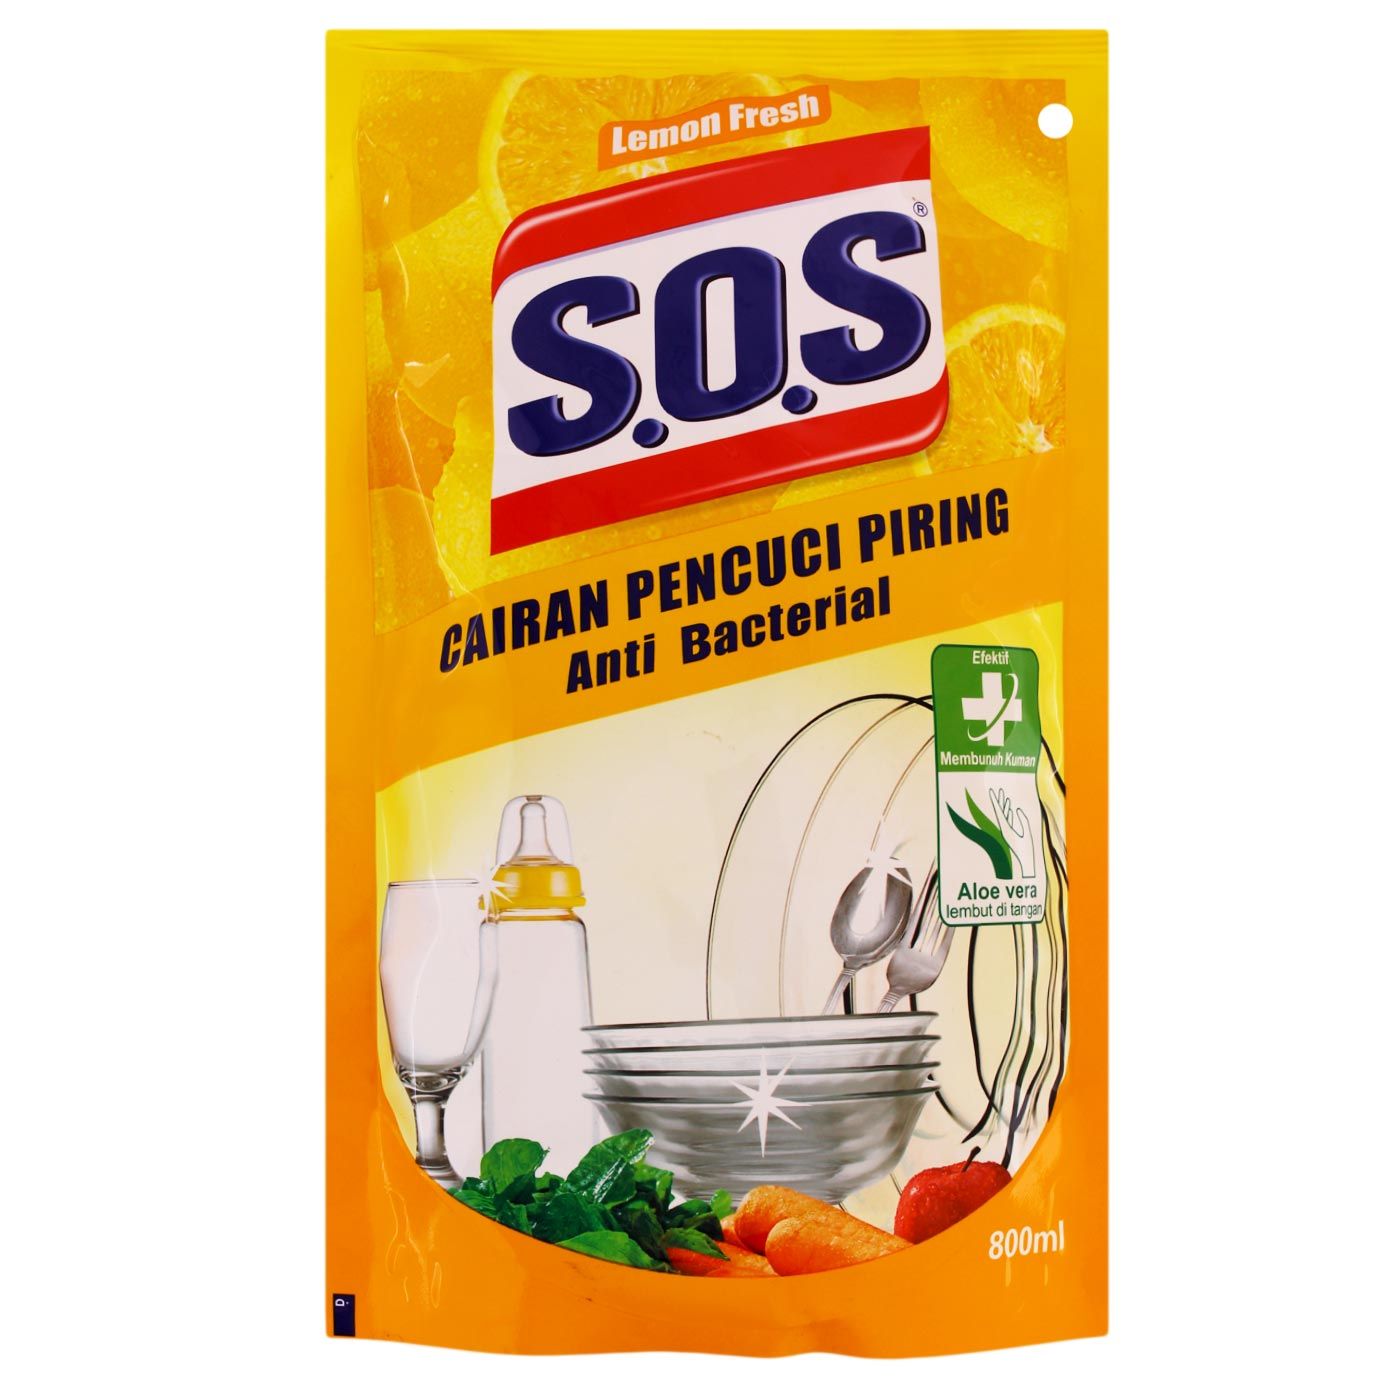 SOS Dish Washer Lemon Fresh Pch 800mL - 1